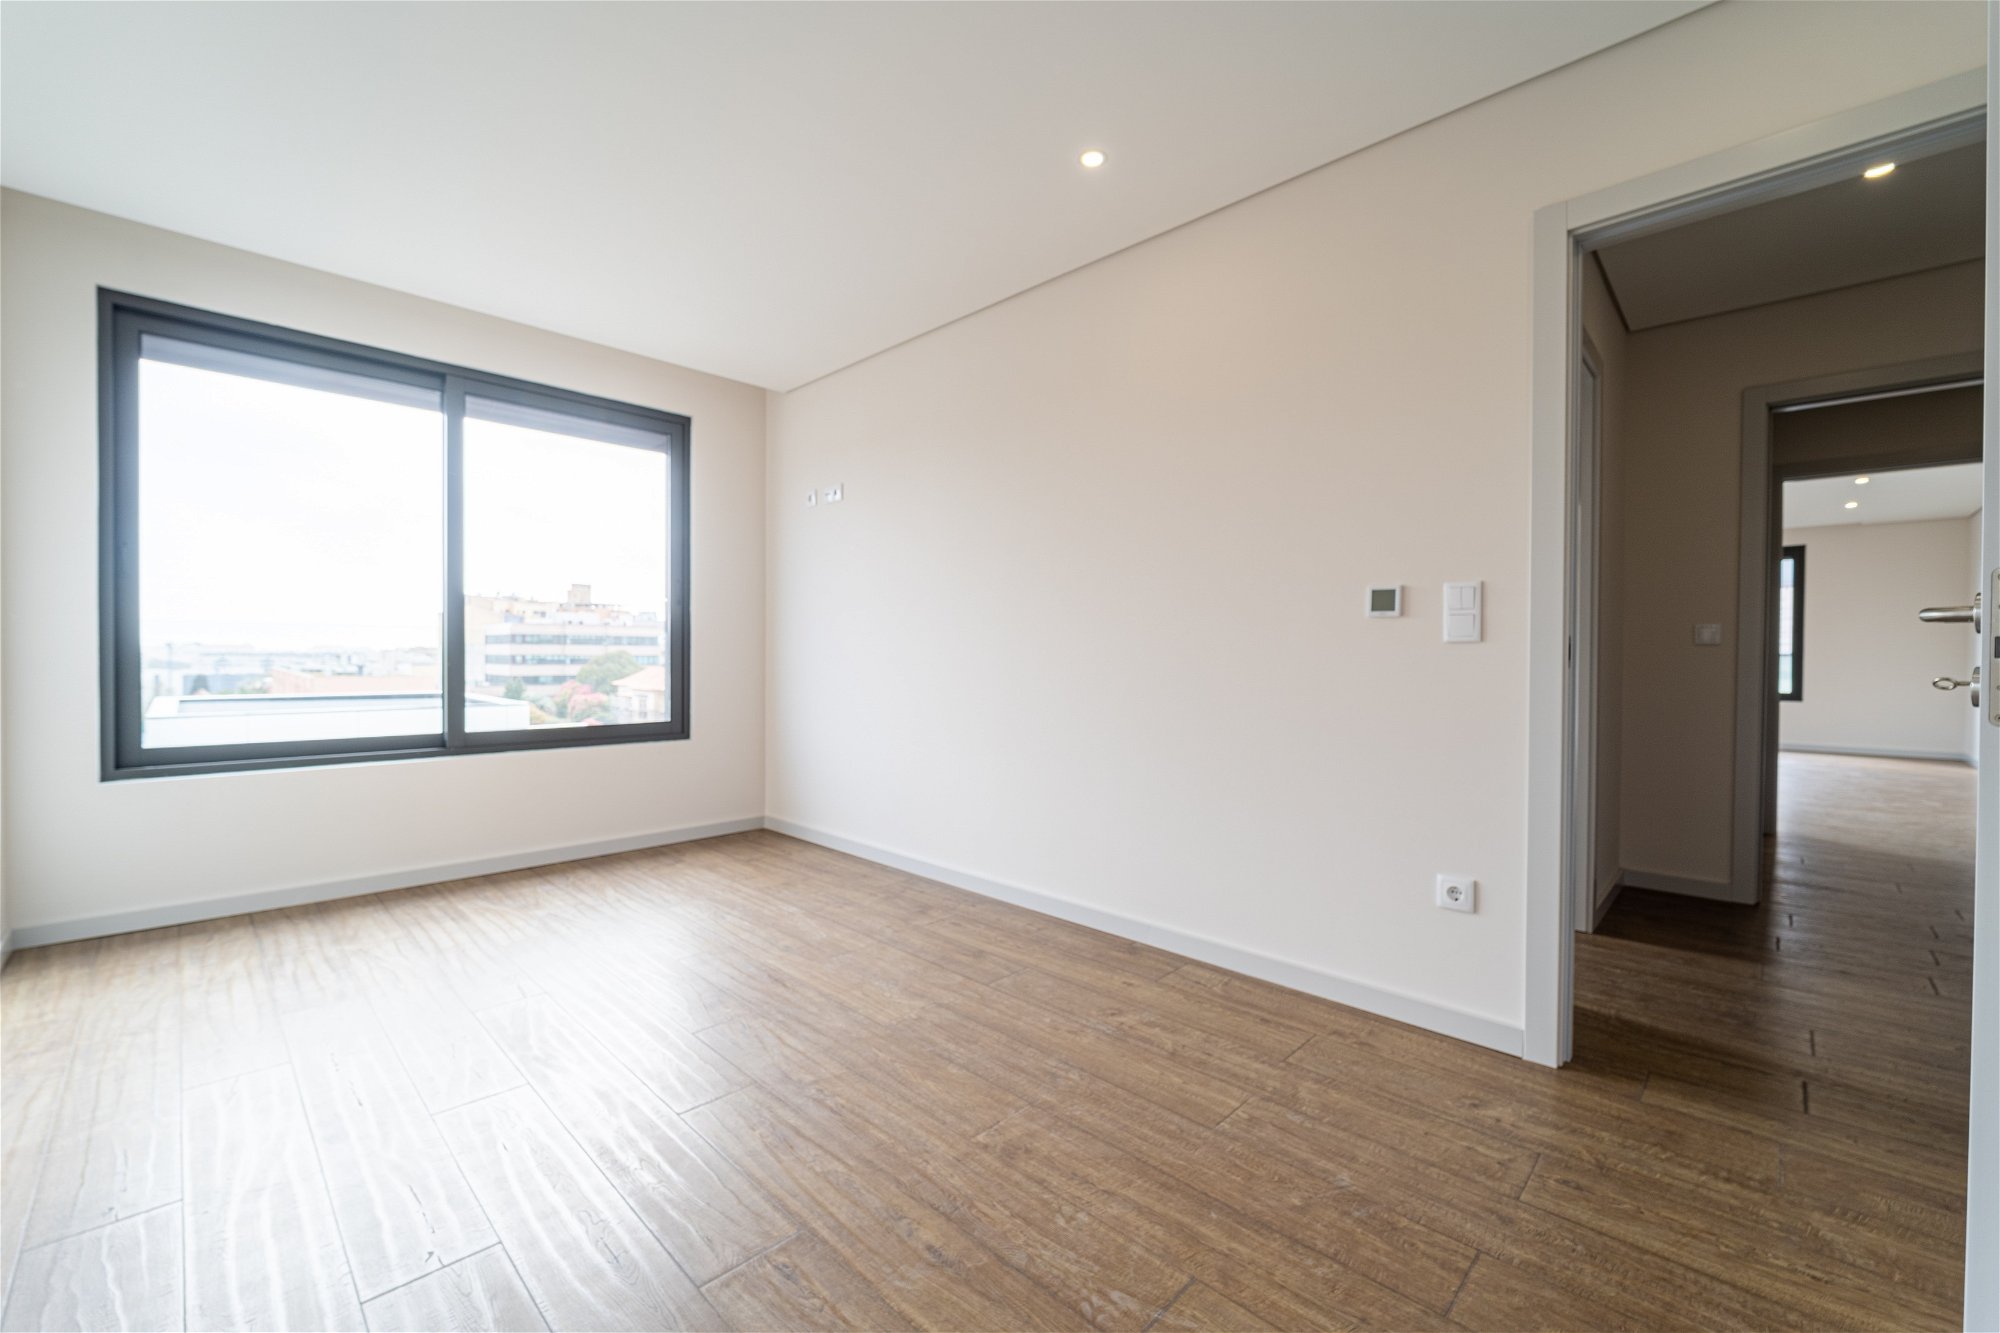 3 bedrooms apartment with balcony in Boavista, Porto 1100496334